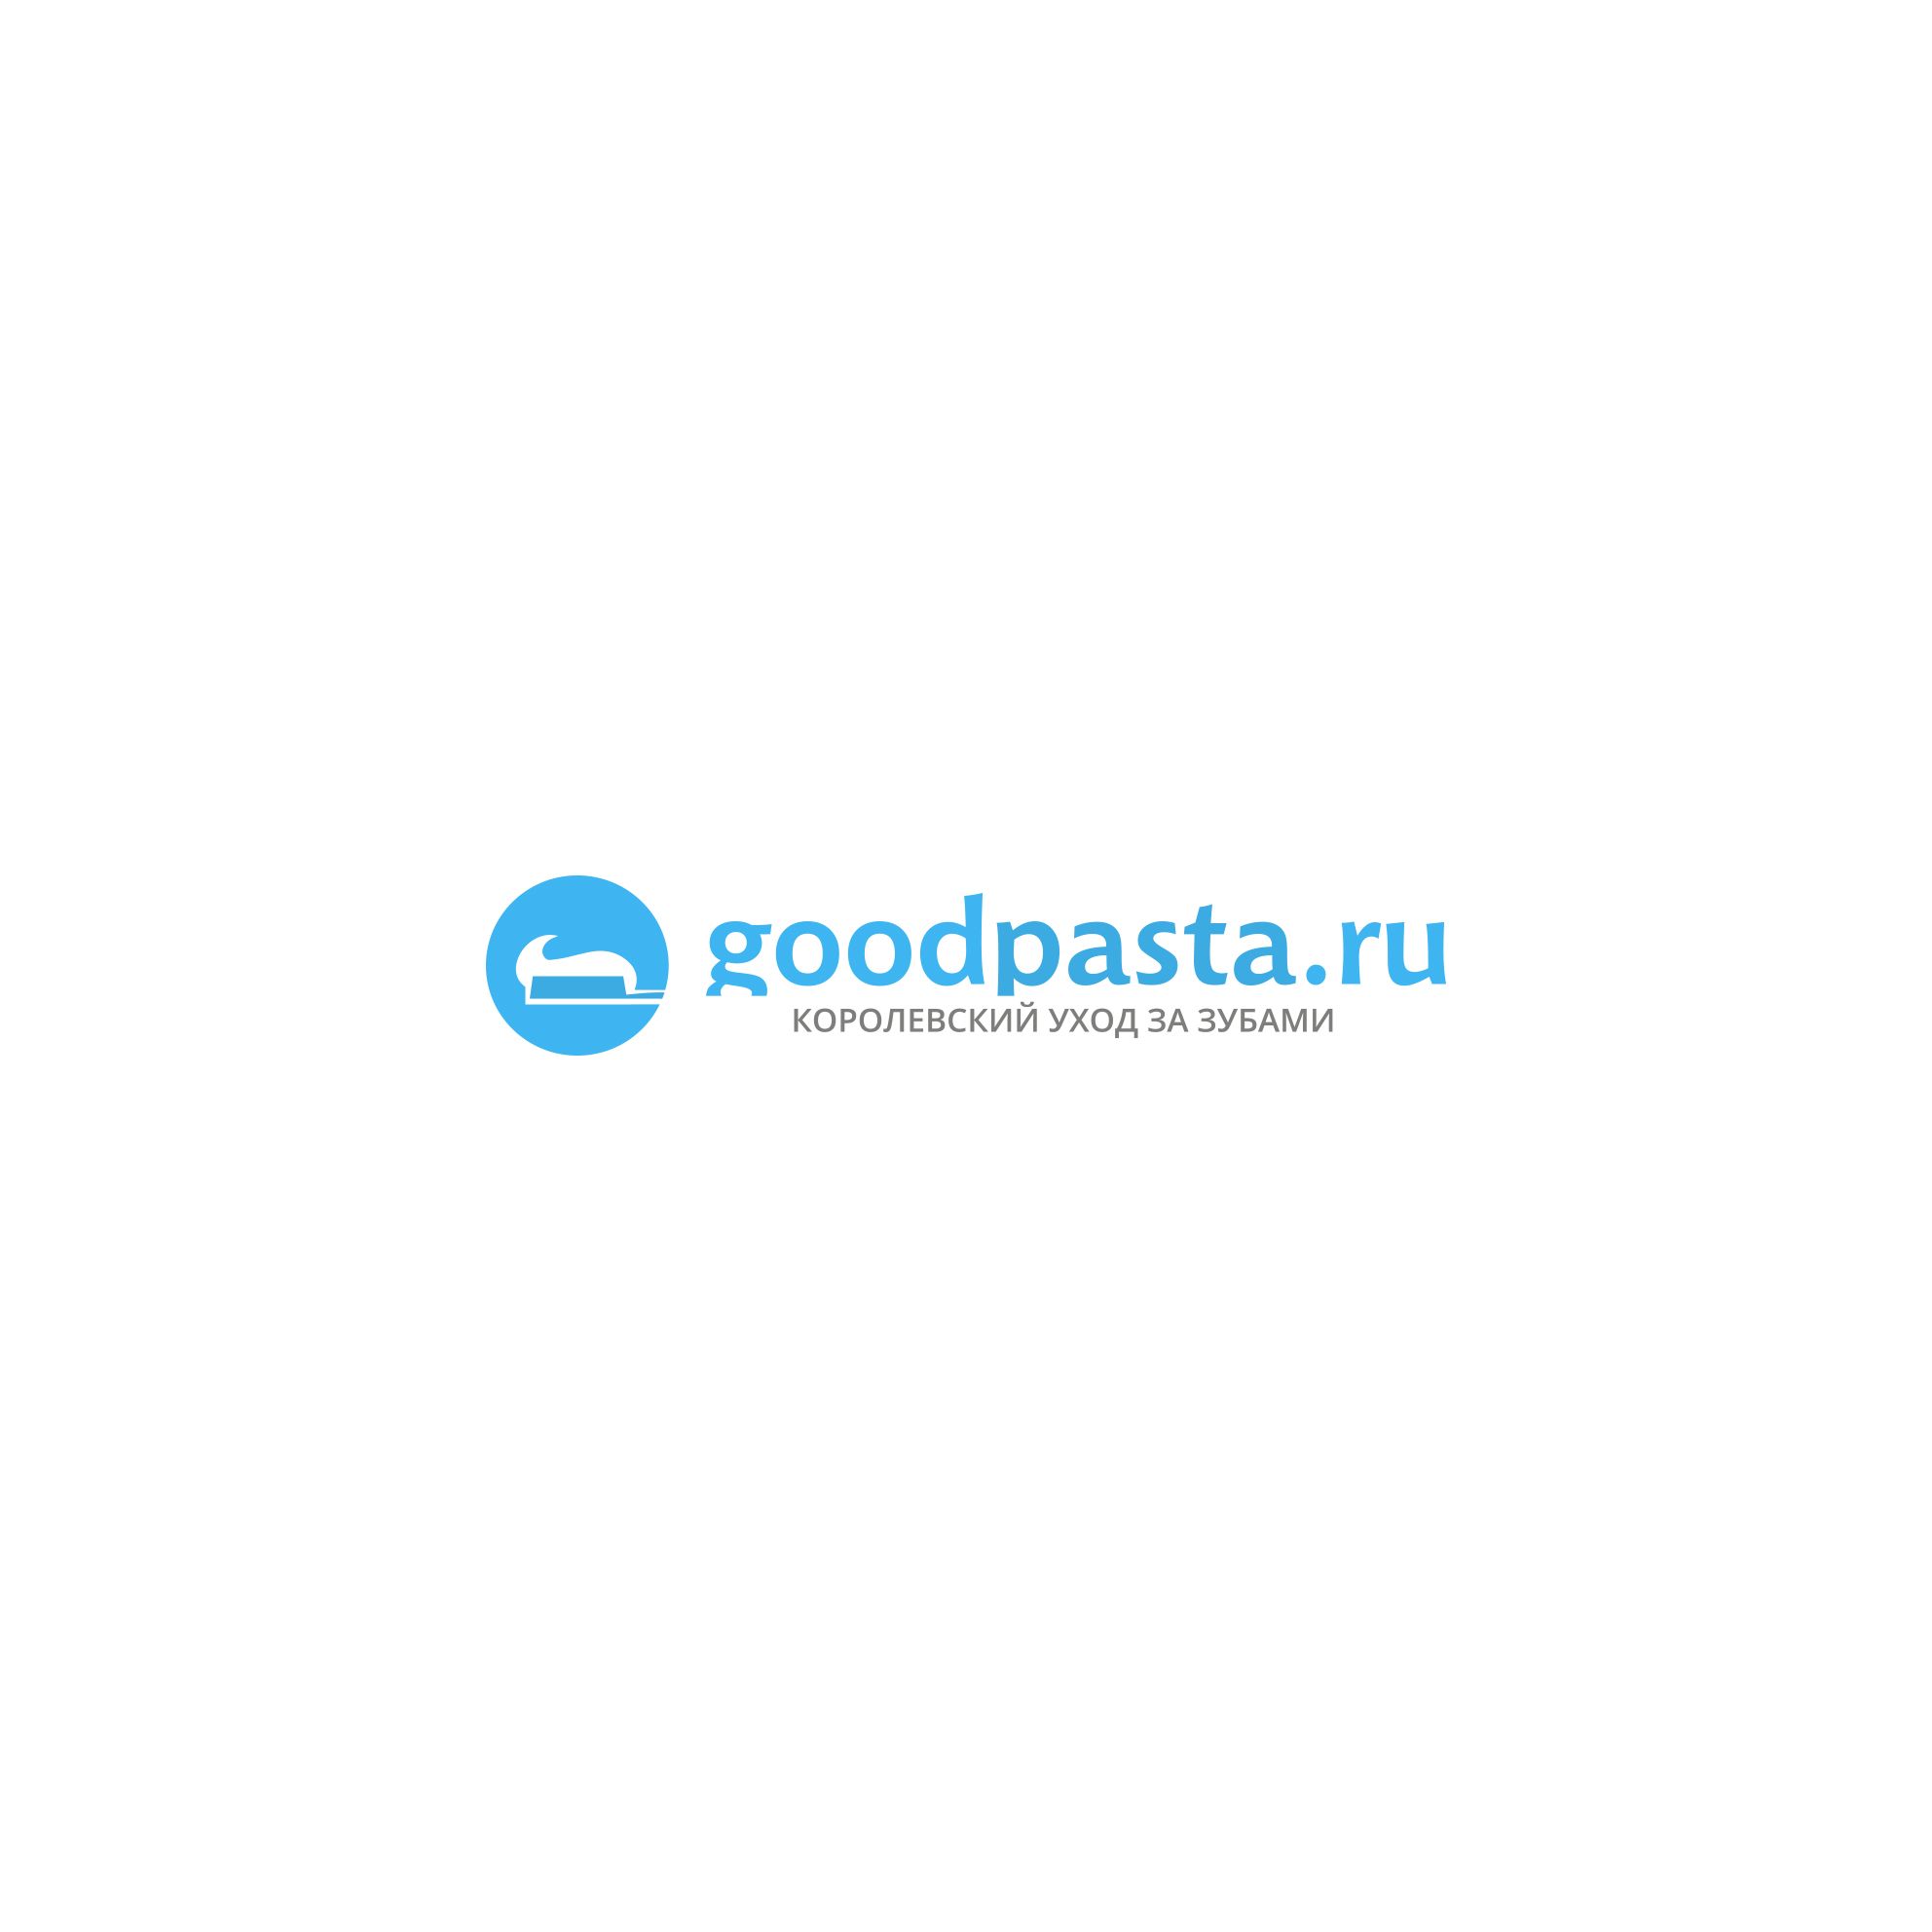 Логотип для интернет-магазина goodpasta.ru - дизайнер mkravchenko